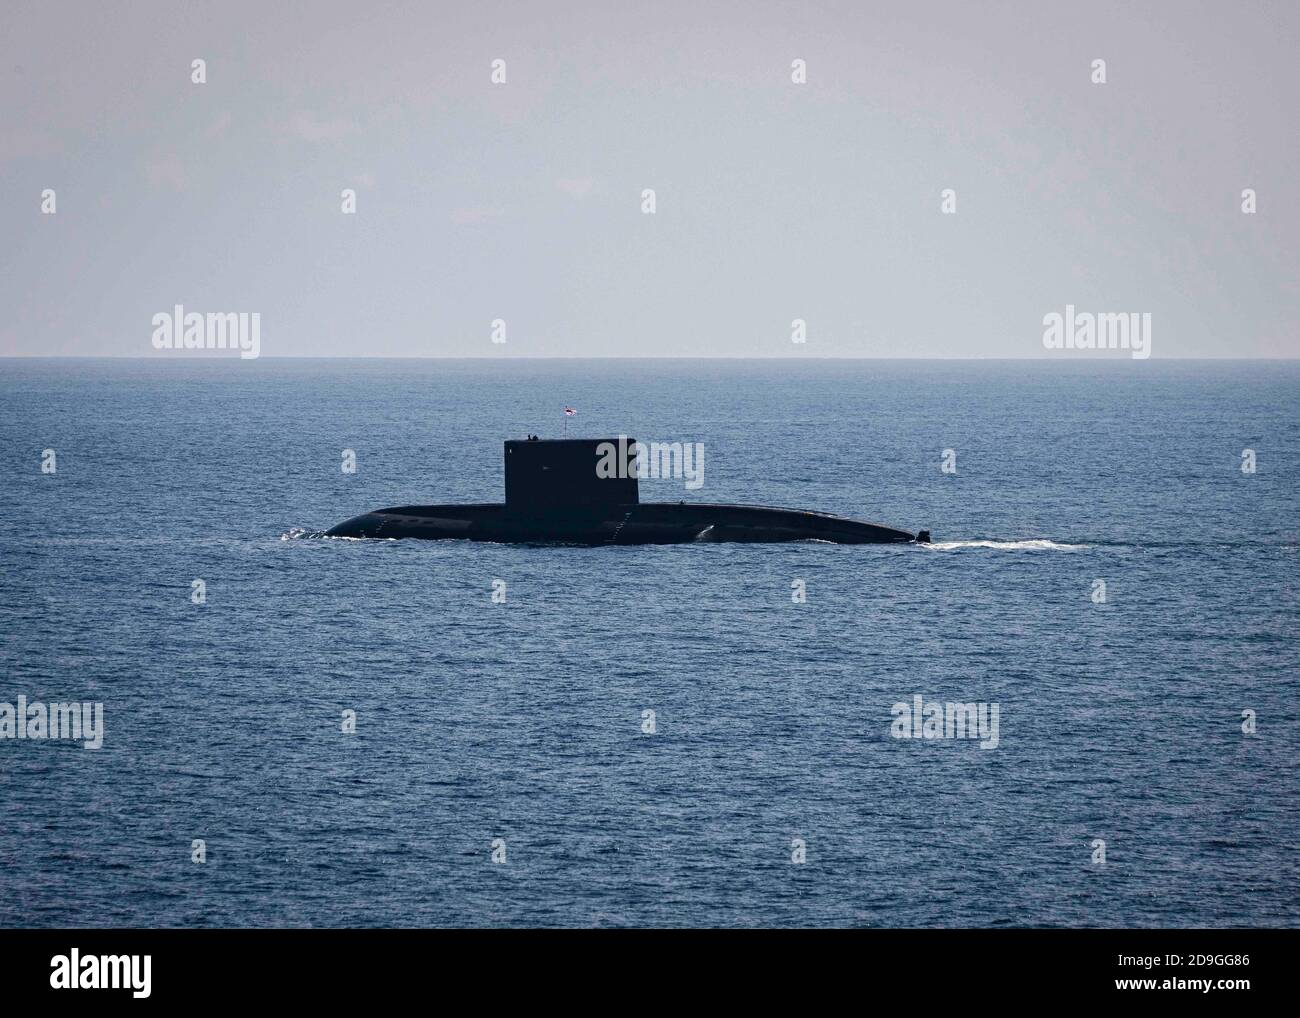 The Indian Navy Sindhughosh-class submarine INS Sindhuraj during exercise Malabar 2020 November 4, 2020 in the Indian Ocean. Stock Photo